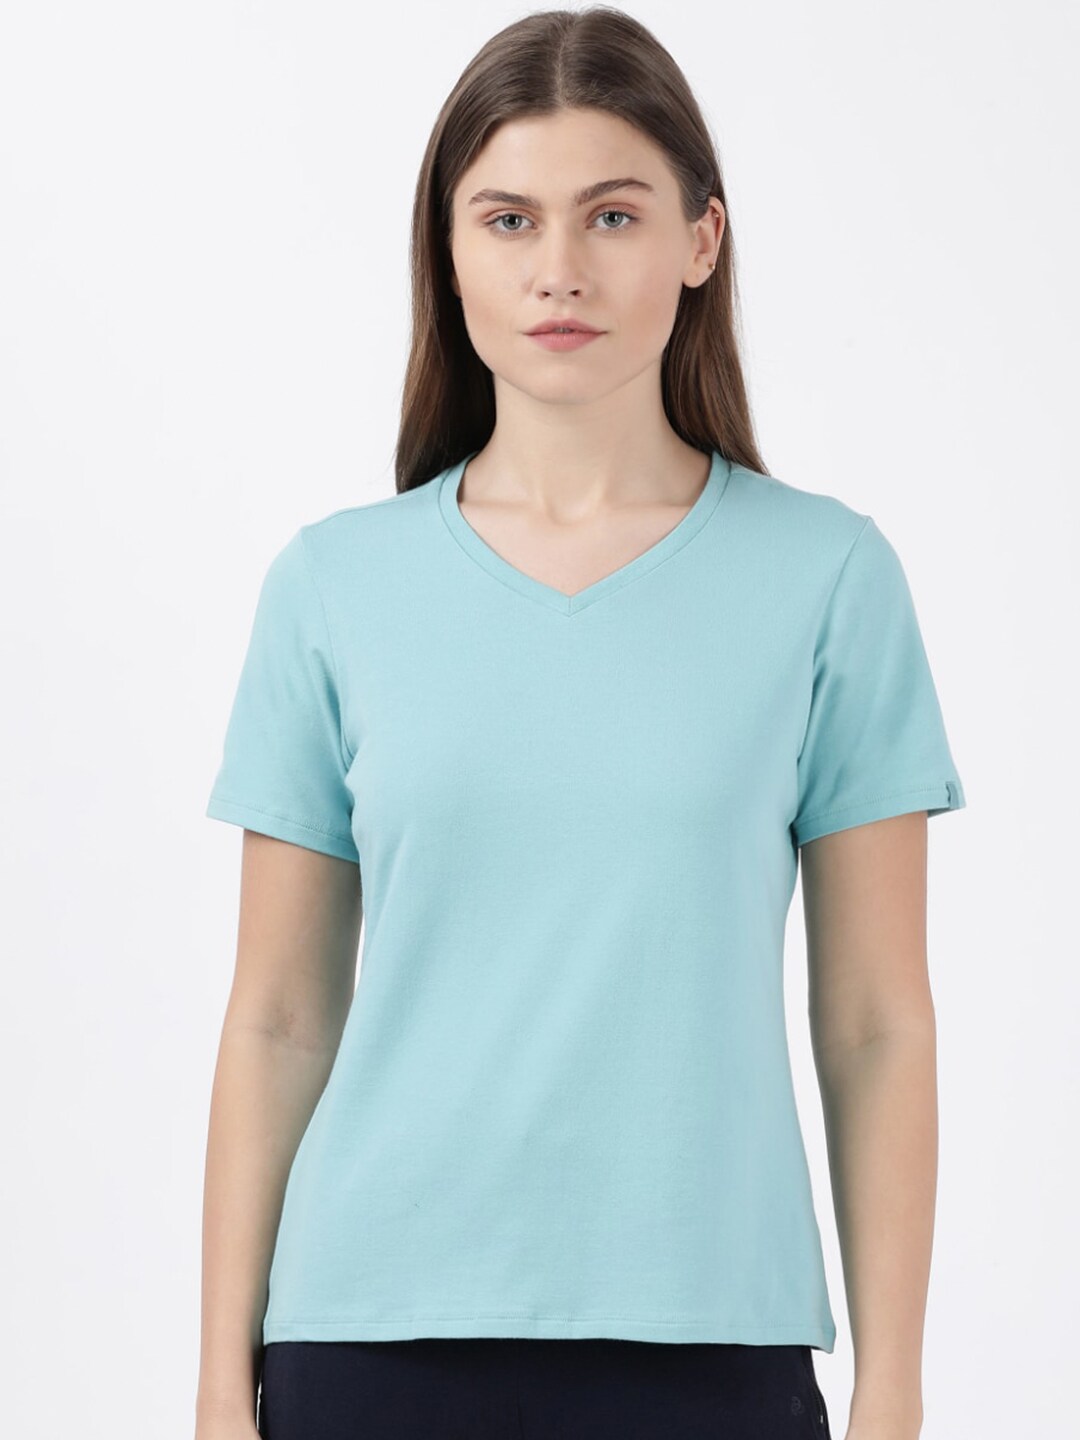 Jockey Women Blue V-Neck Cotton T-shirt Price in India